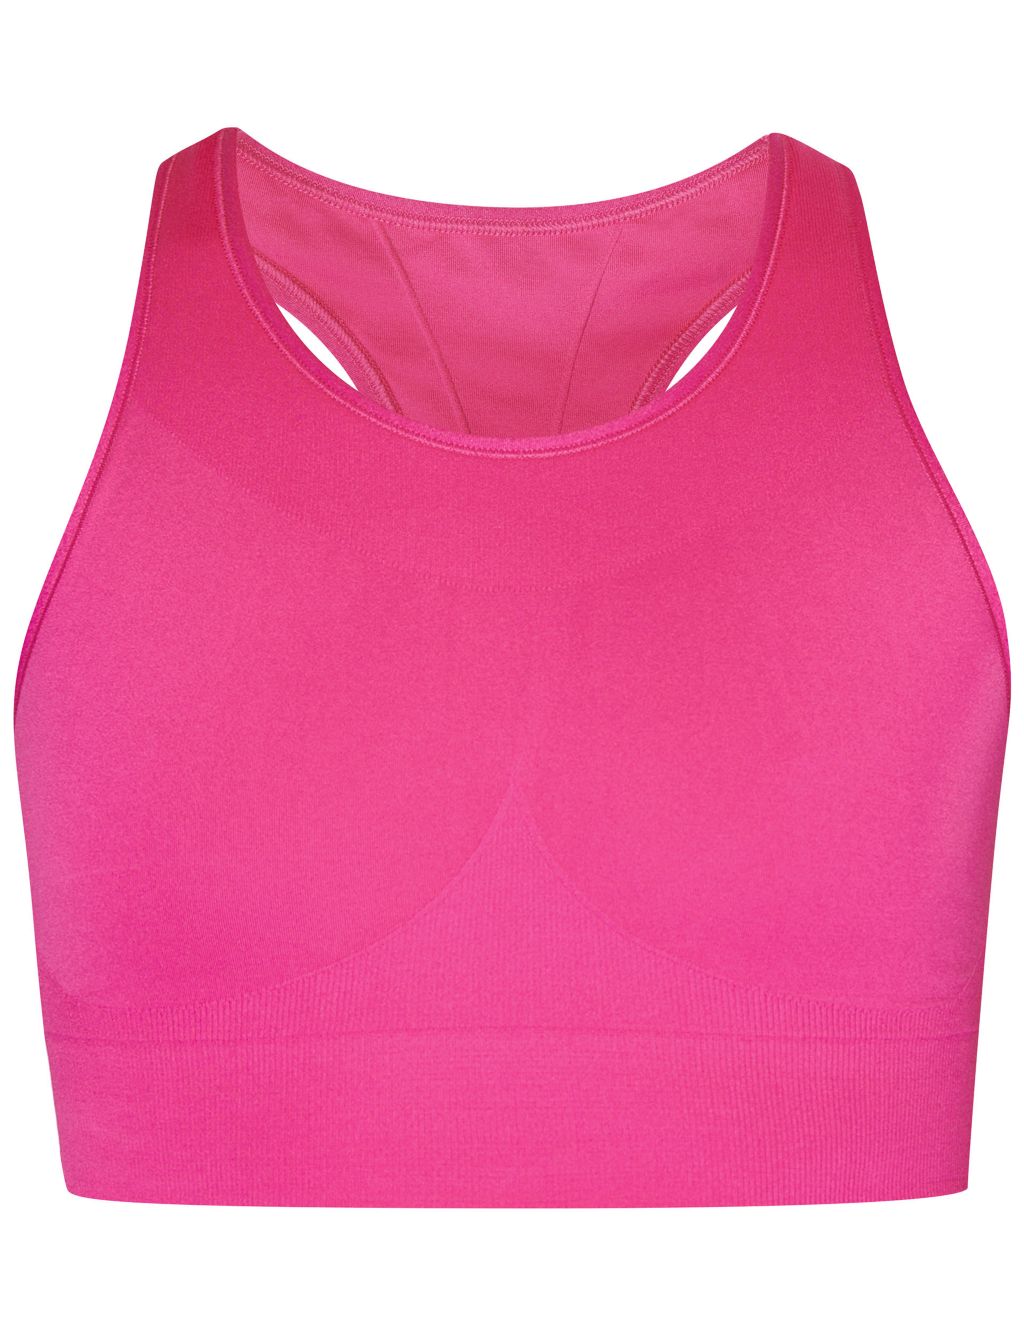 NWT Sweaty Betty [ Small ] Stamina Sports Bra in Tayberry Pink #T920